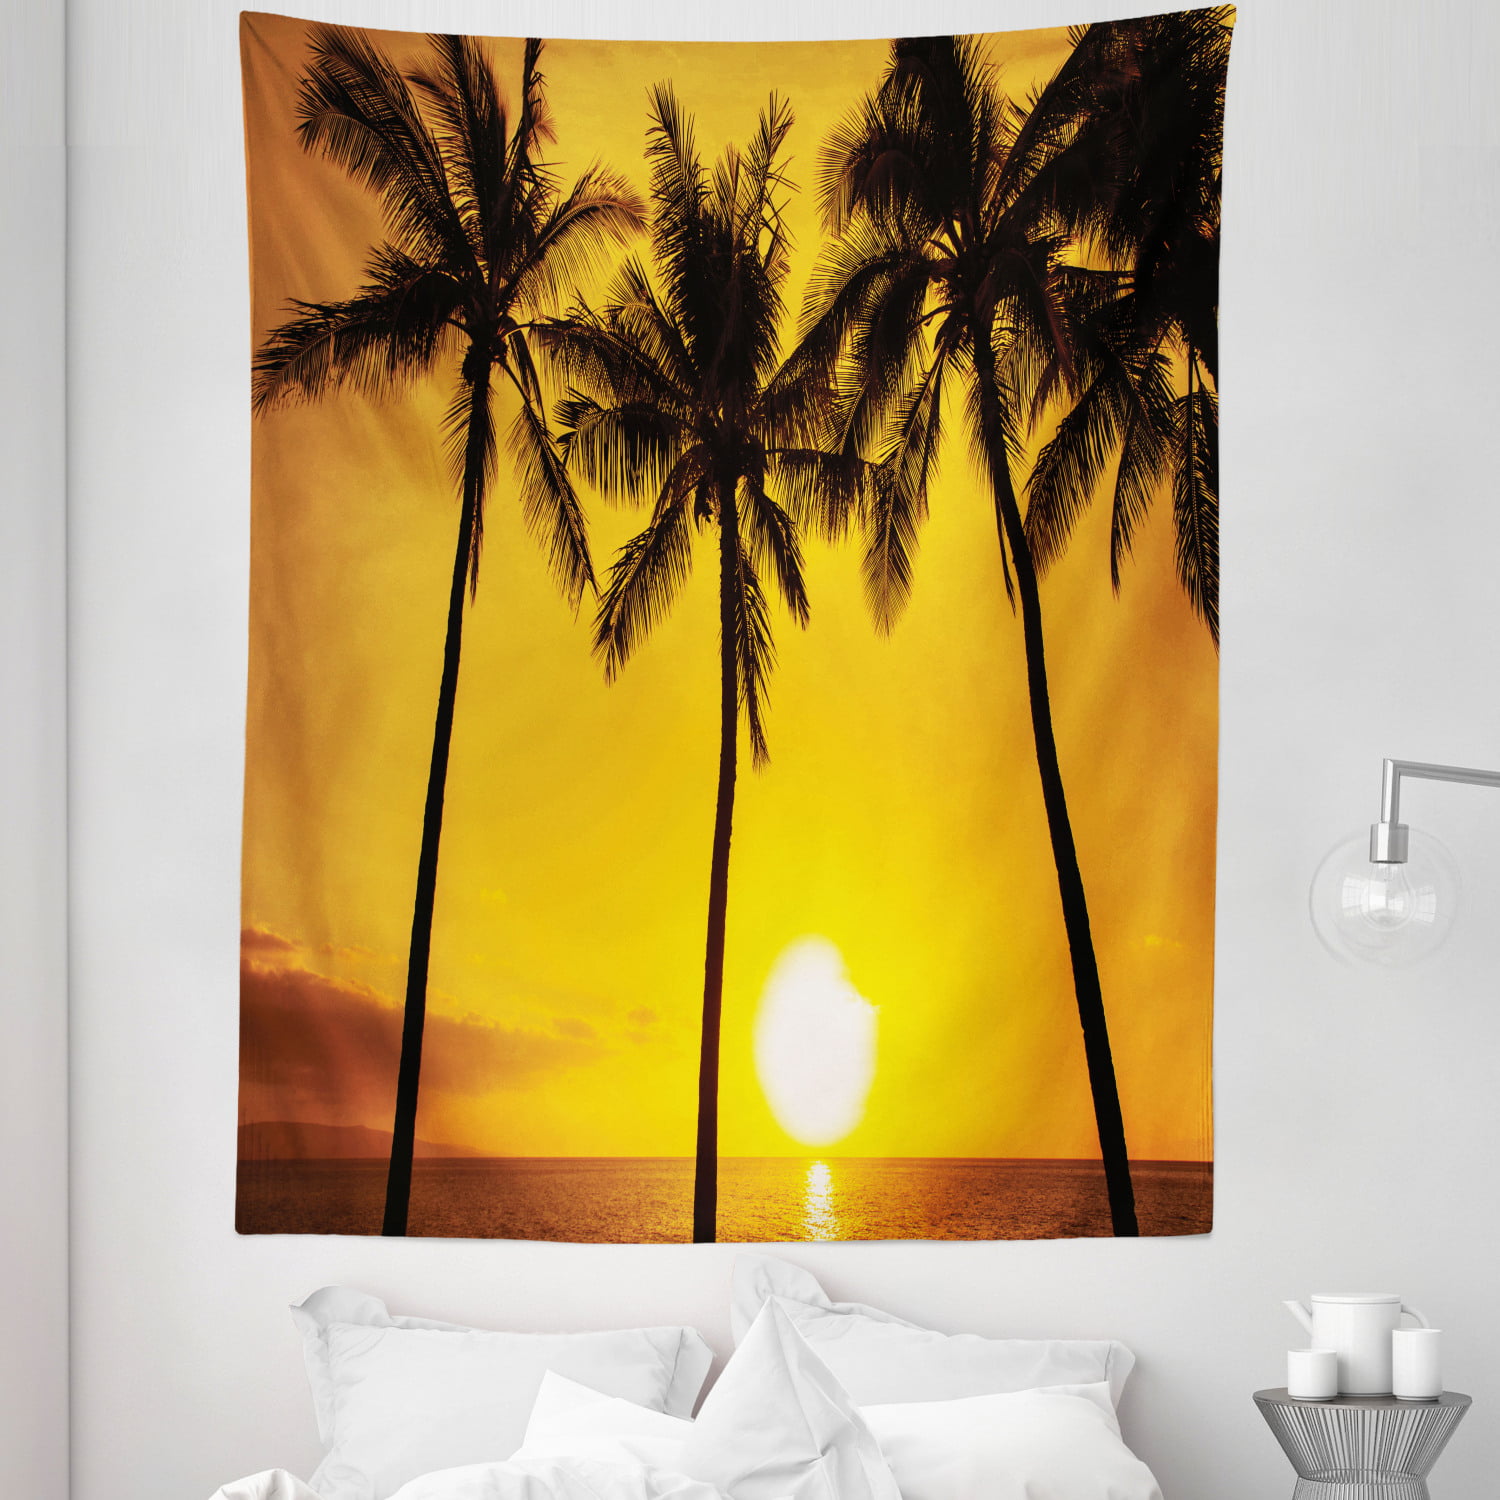 Sunset Coconut Beach Hammock Tapestry for Bedroom Living Room Dorm Decor 